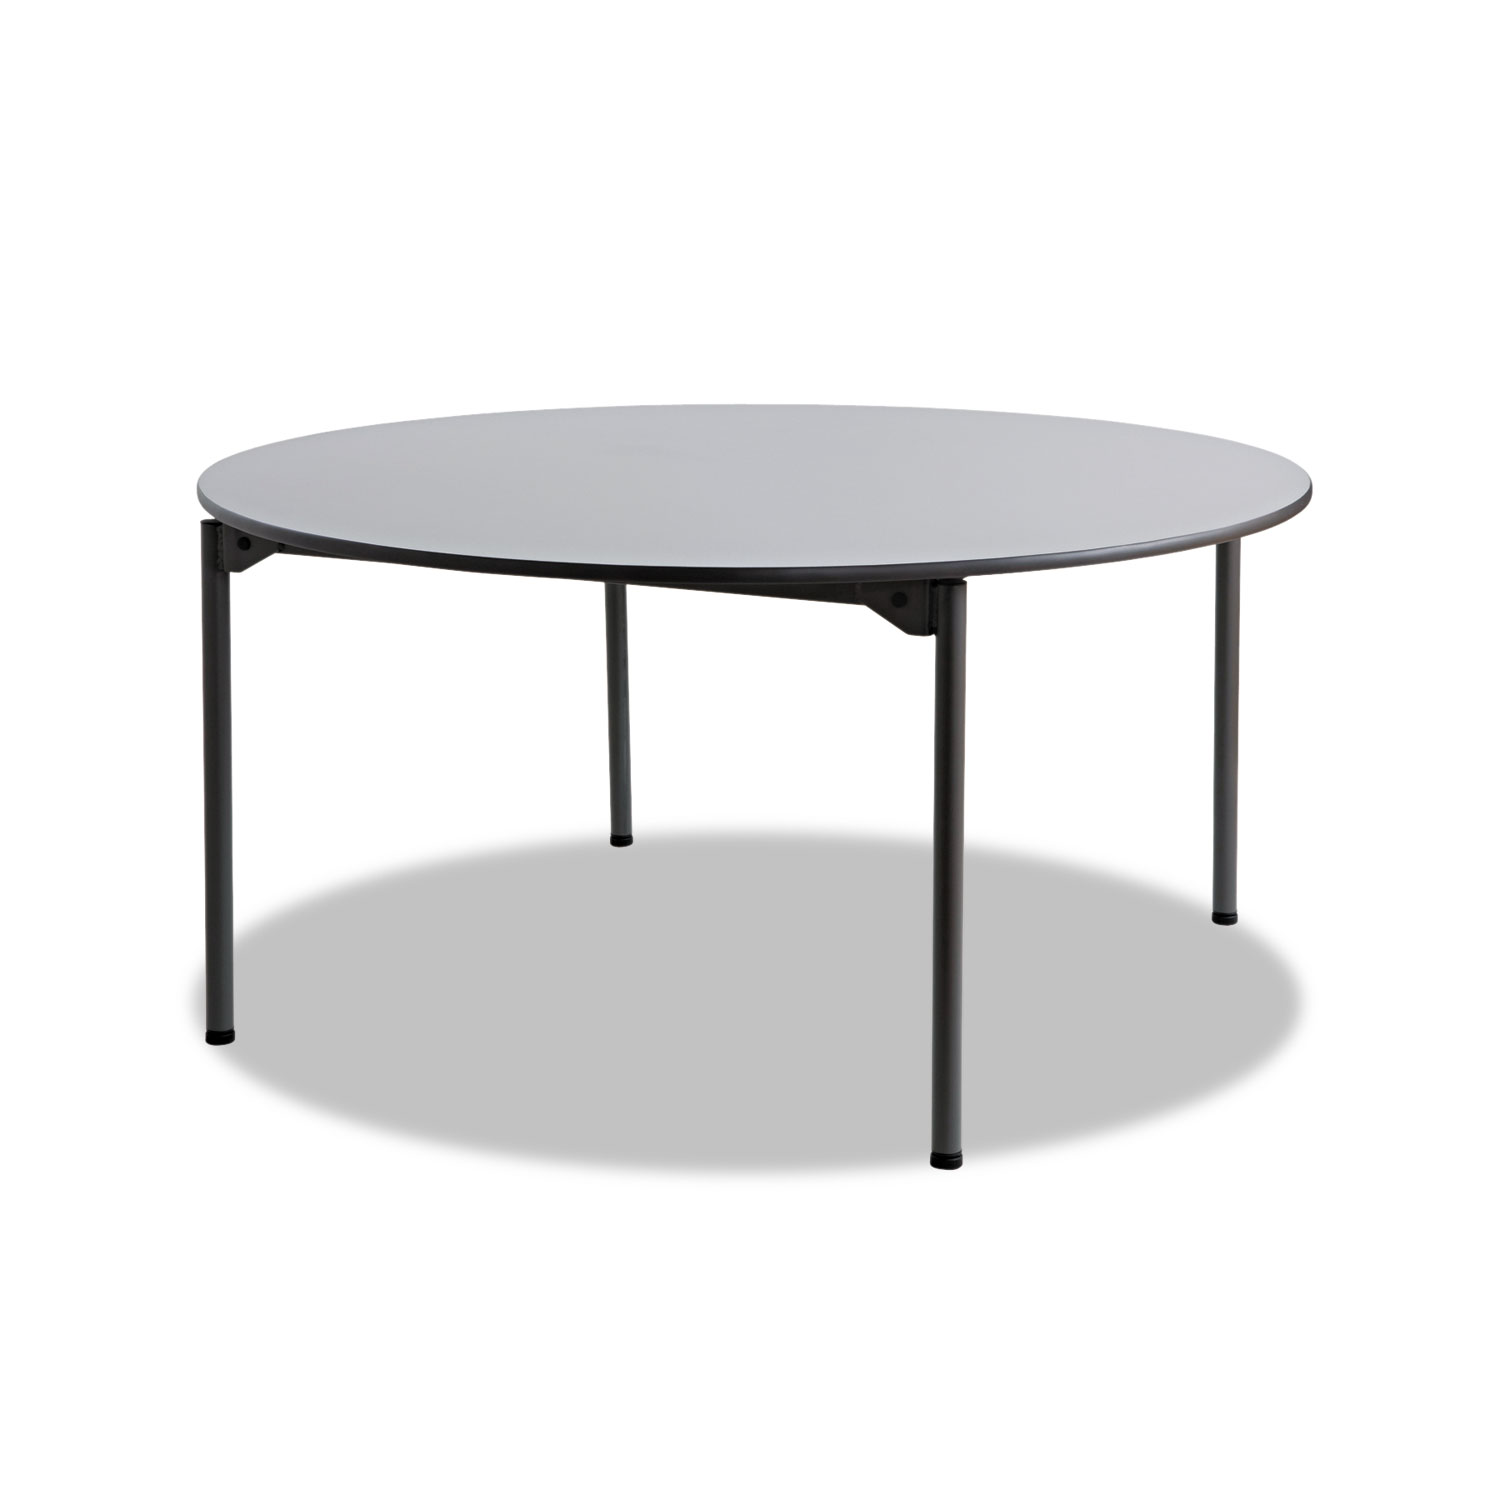 Maxx Legroom Round Folding Table, 60 Dia. x 29-1/2h, Gray/Charcoal